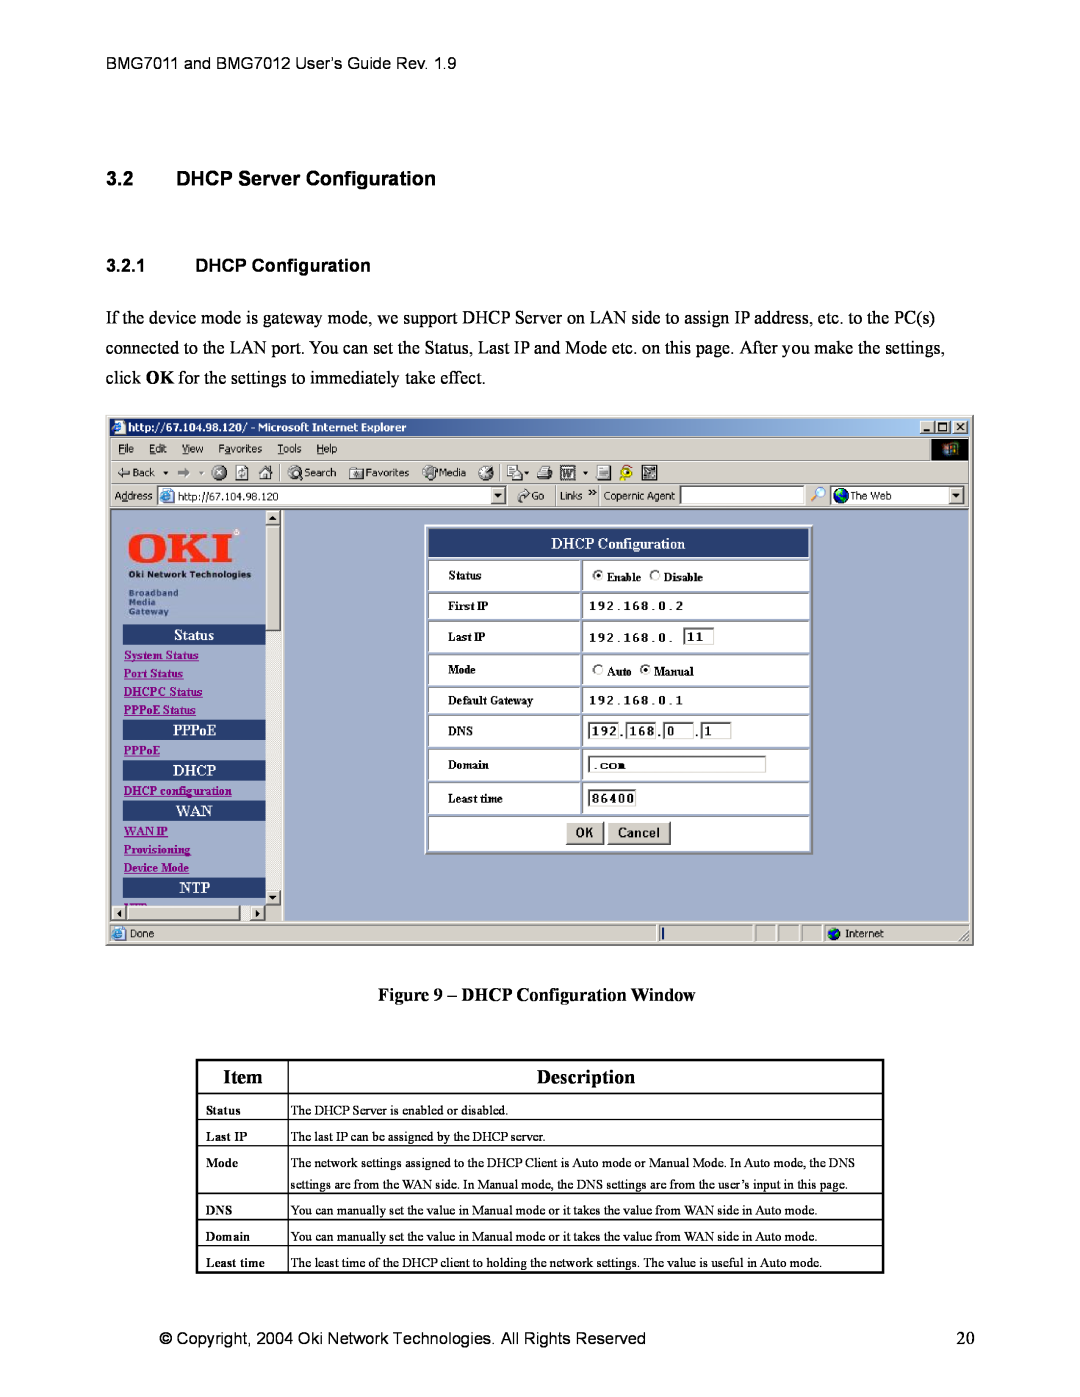 Oki BMG7012, BMG7011 manual 3.2DHCP Server Configuration, 3.2.1DHCP Configuration, DHCP Configuration Window, Description 